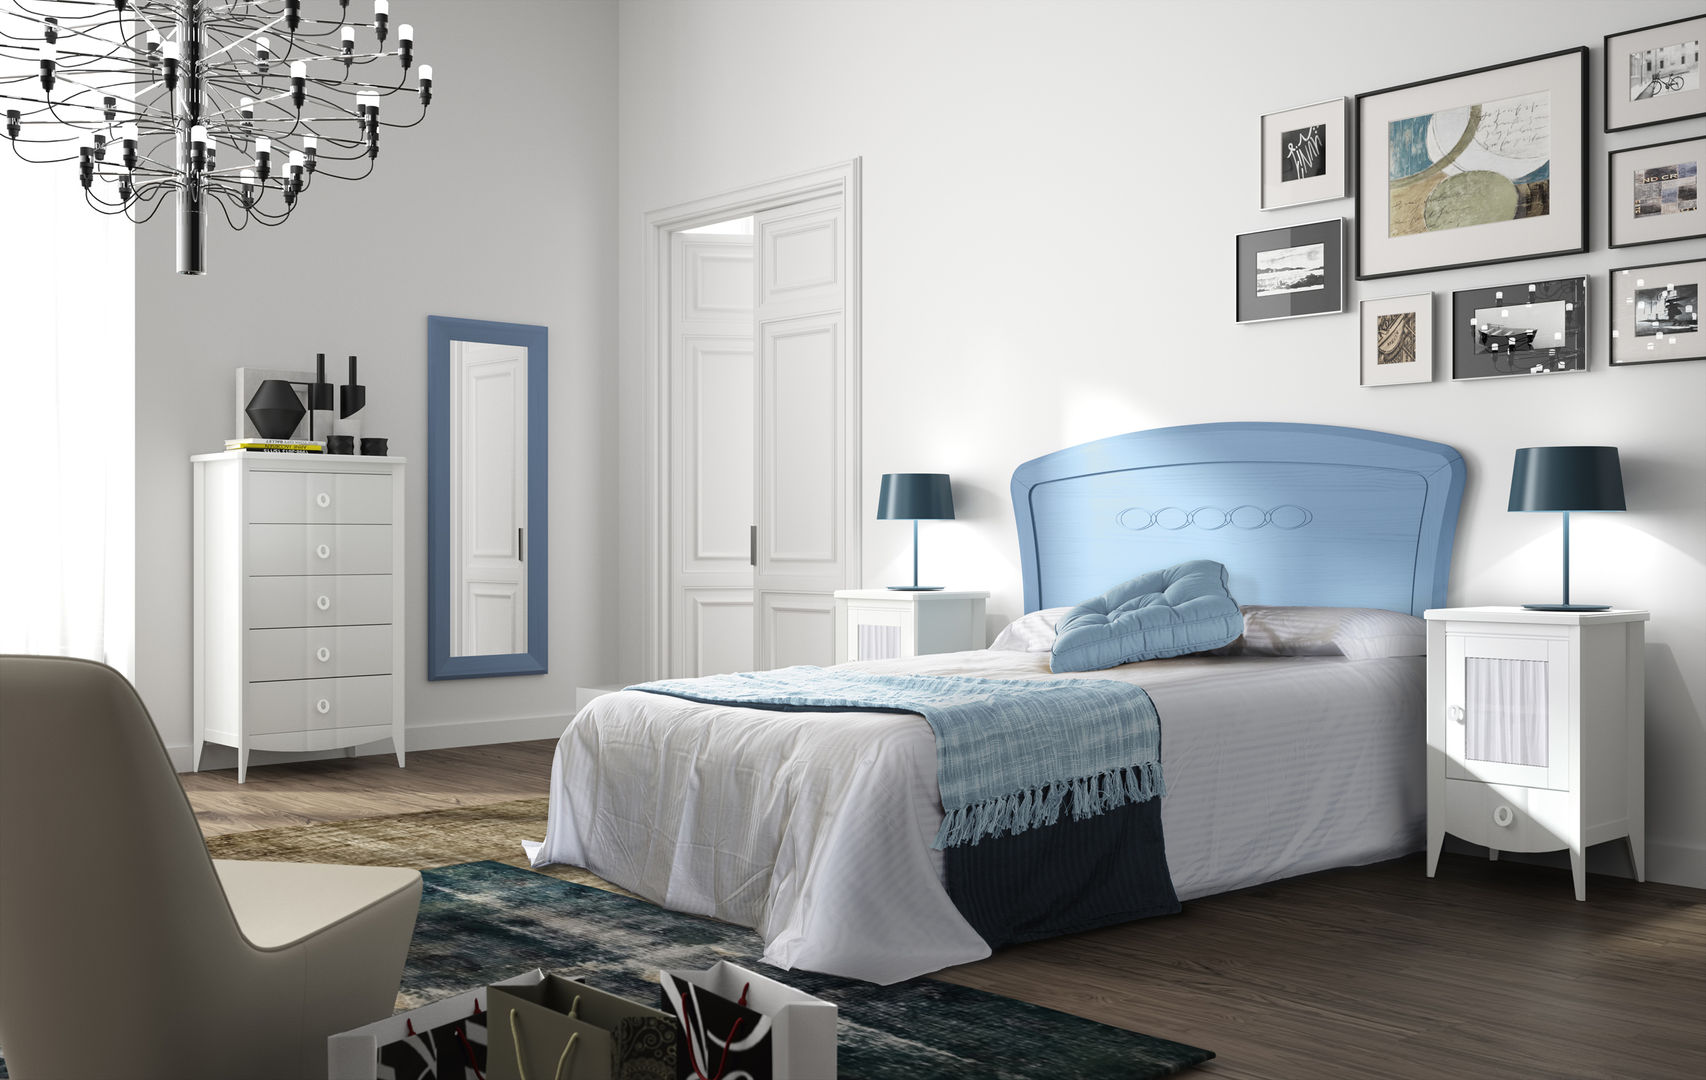 Zona Noche, ELIZANA ELIZANA Mediterranean style bedroom Beds & headboards